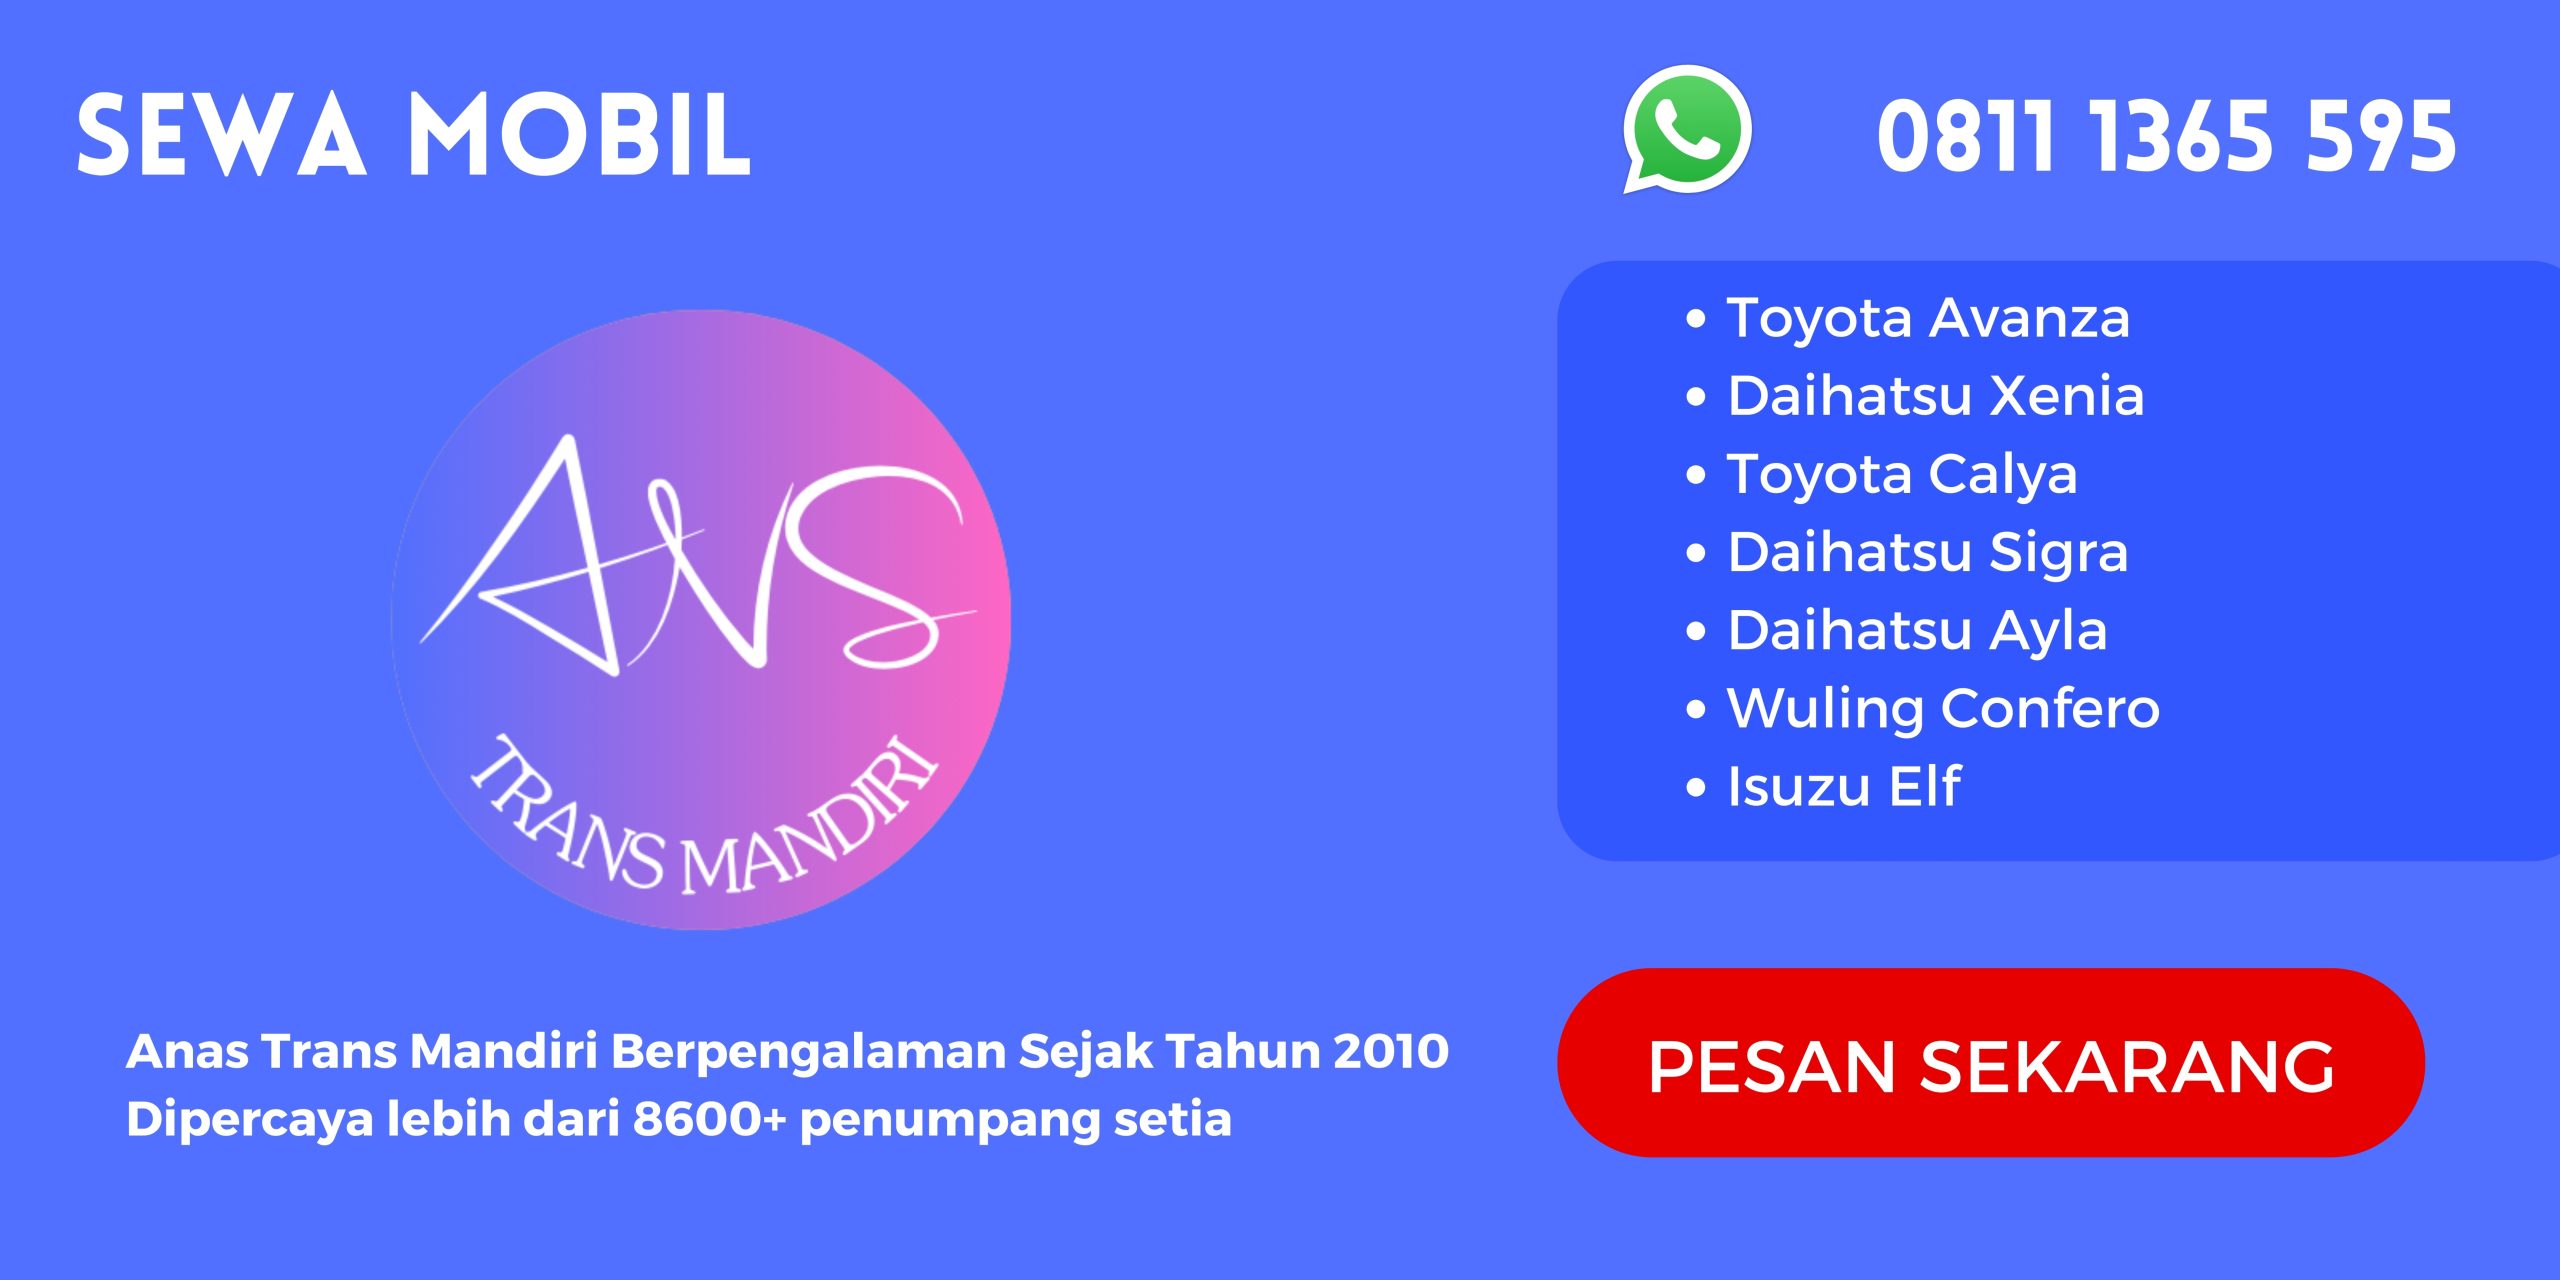 Sewa Mobil - Banner Anas Trans Mandiri